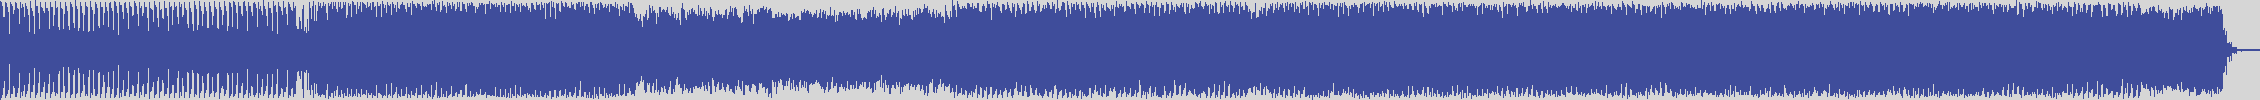 atomic_recordings [AR020] Joseph Swift - Dark Matter [Original Mix] audio wave form